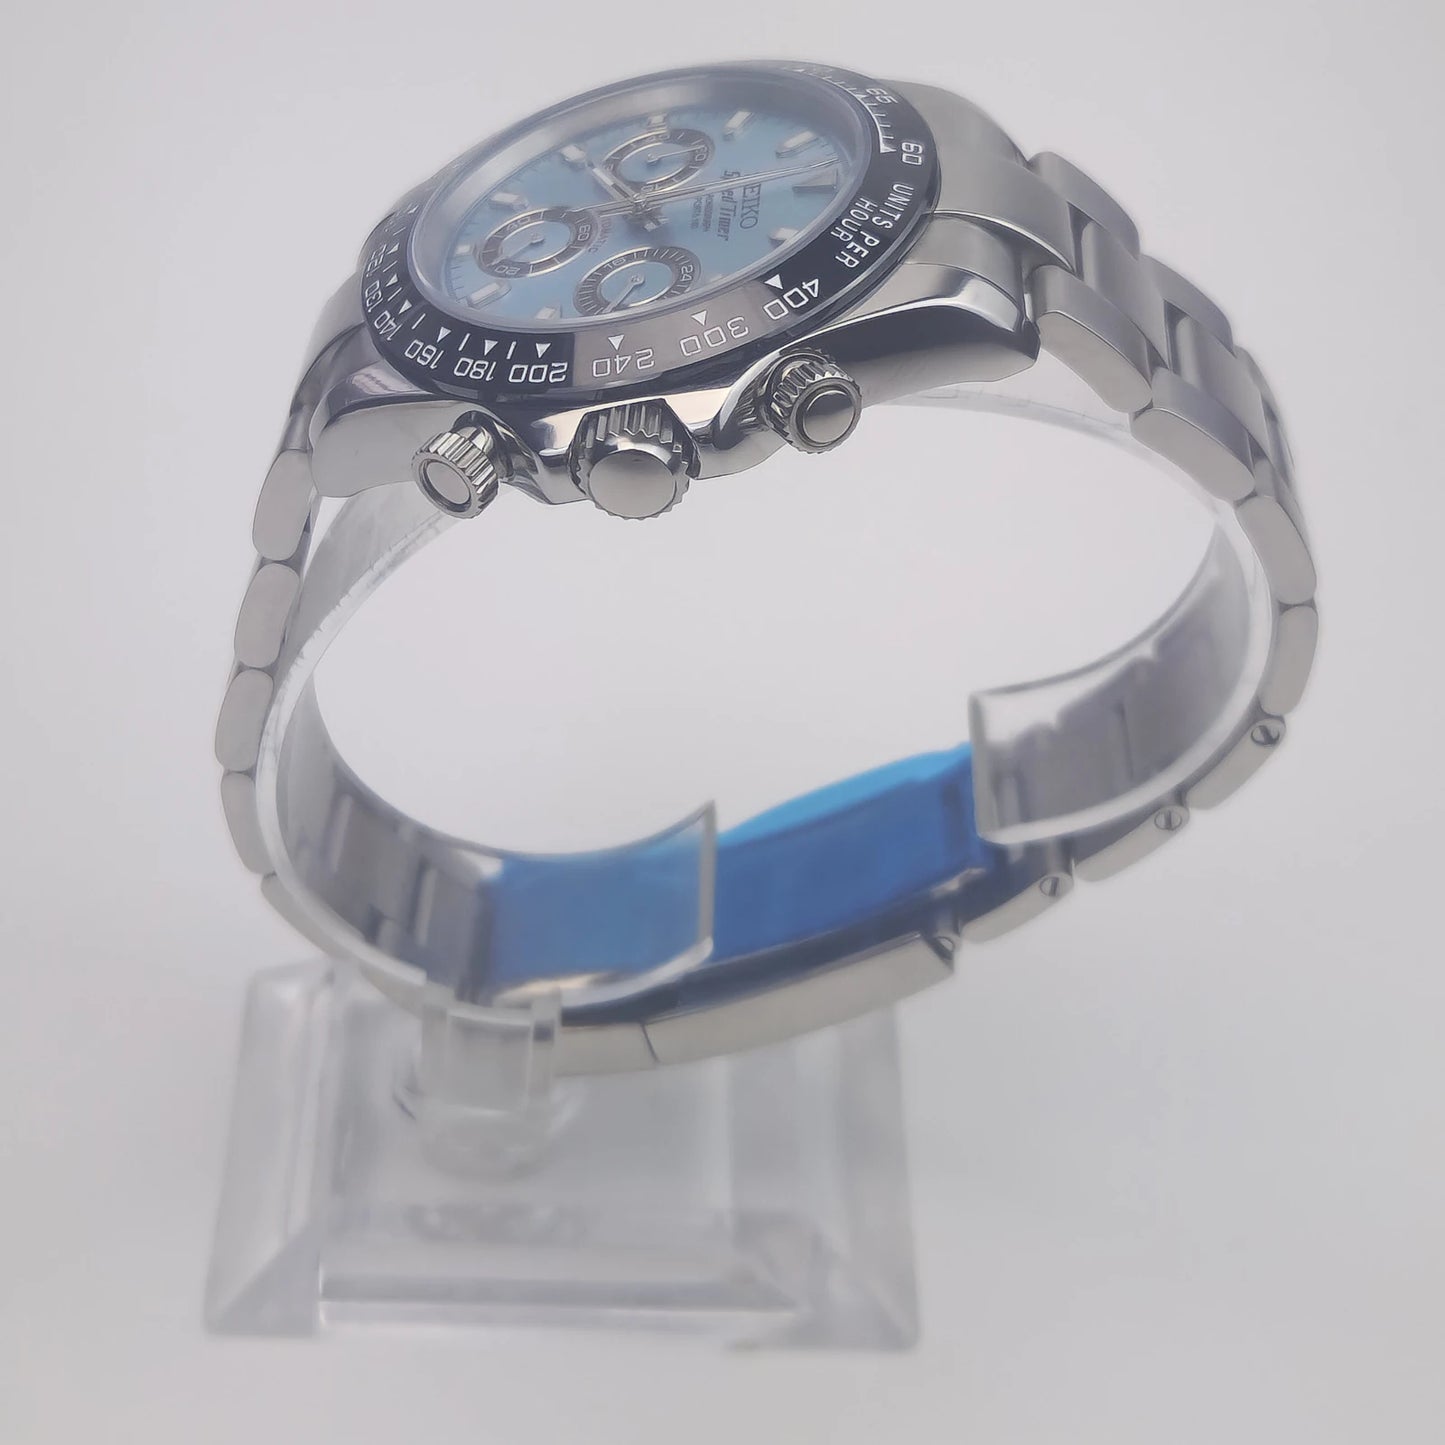 Custom Watch Mod with VK63 Quartz Movement Day tona Style